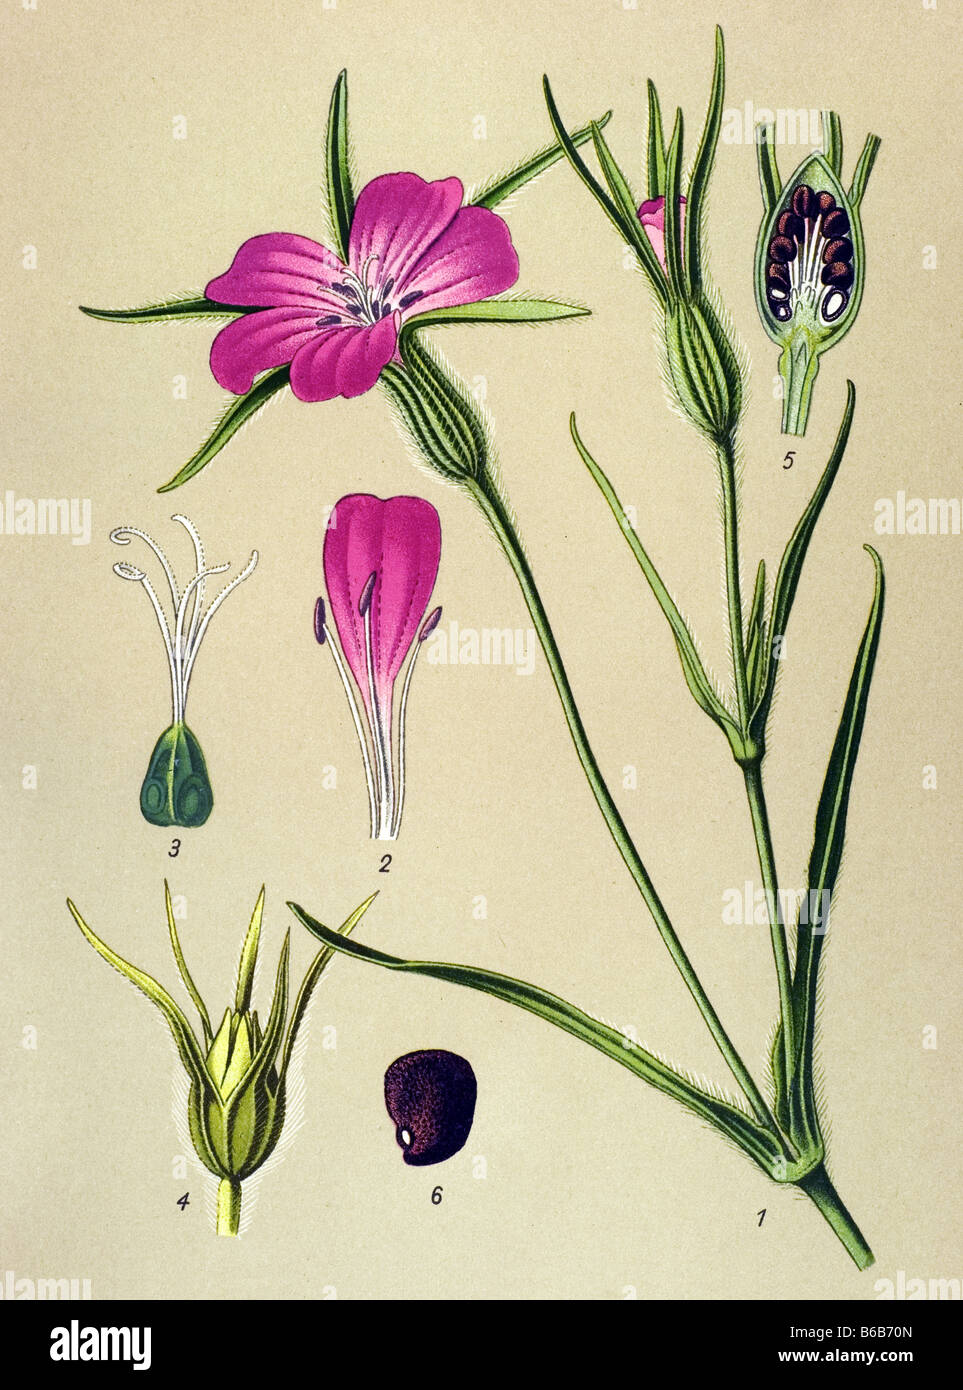 Common Corncockle, Agrostemma githago, poisonous plants illustrations Stock Photo